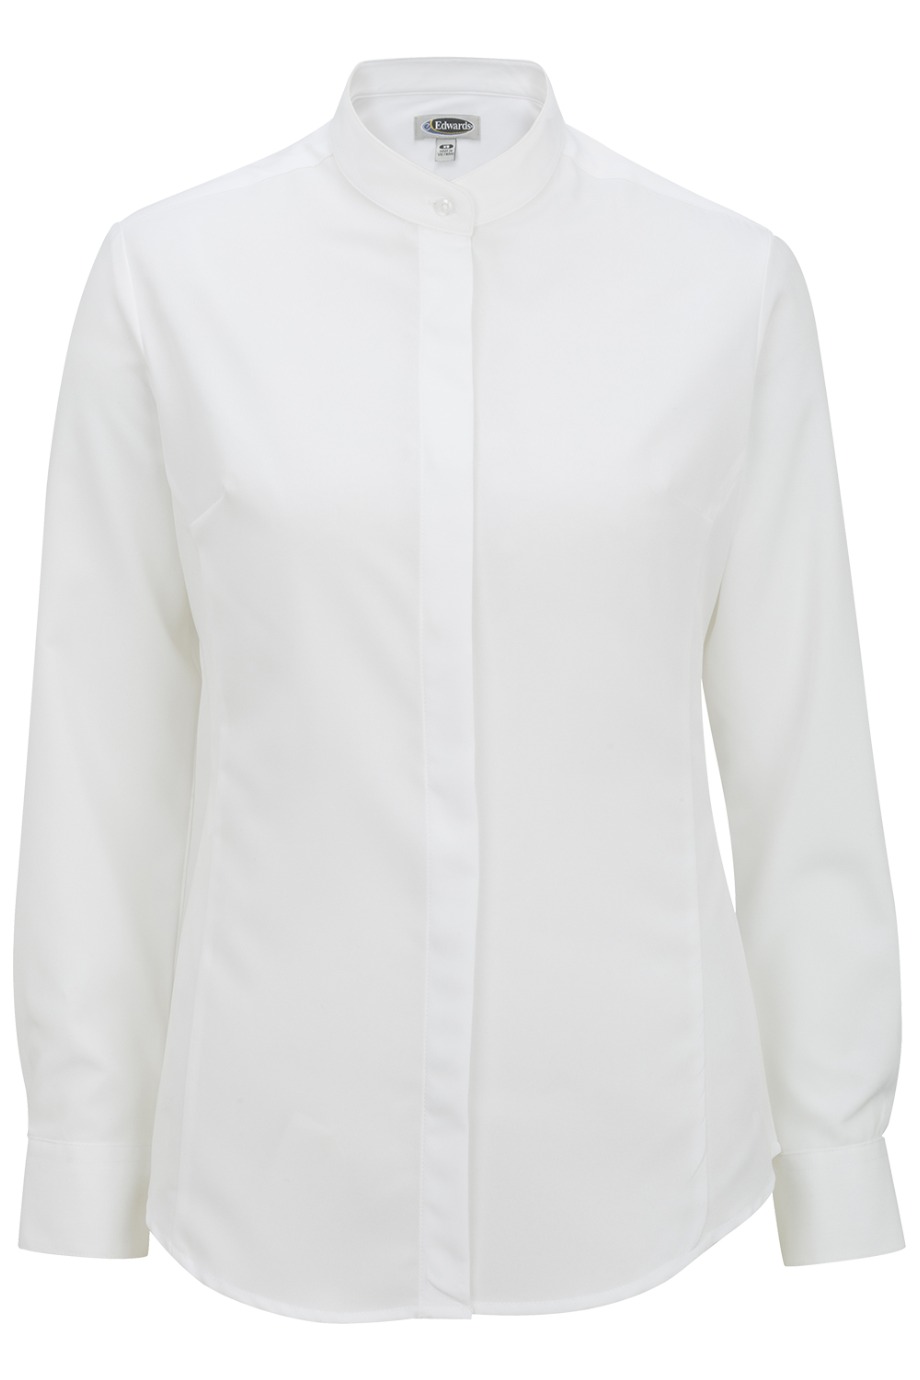 Edwards Garment 5392 - Ladies Batiste Banded Collar Shirt